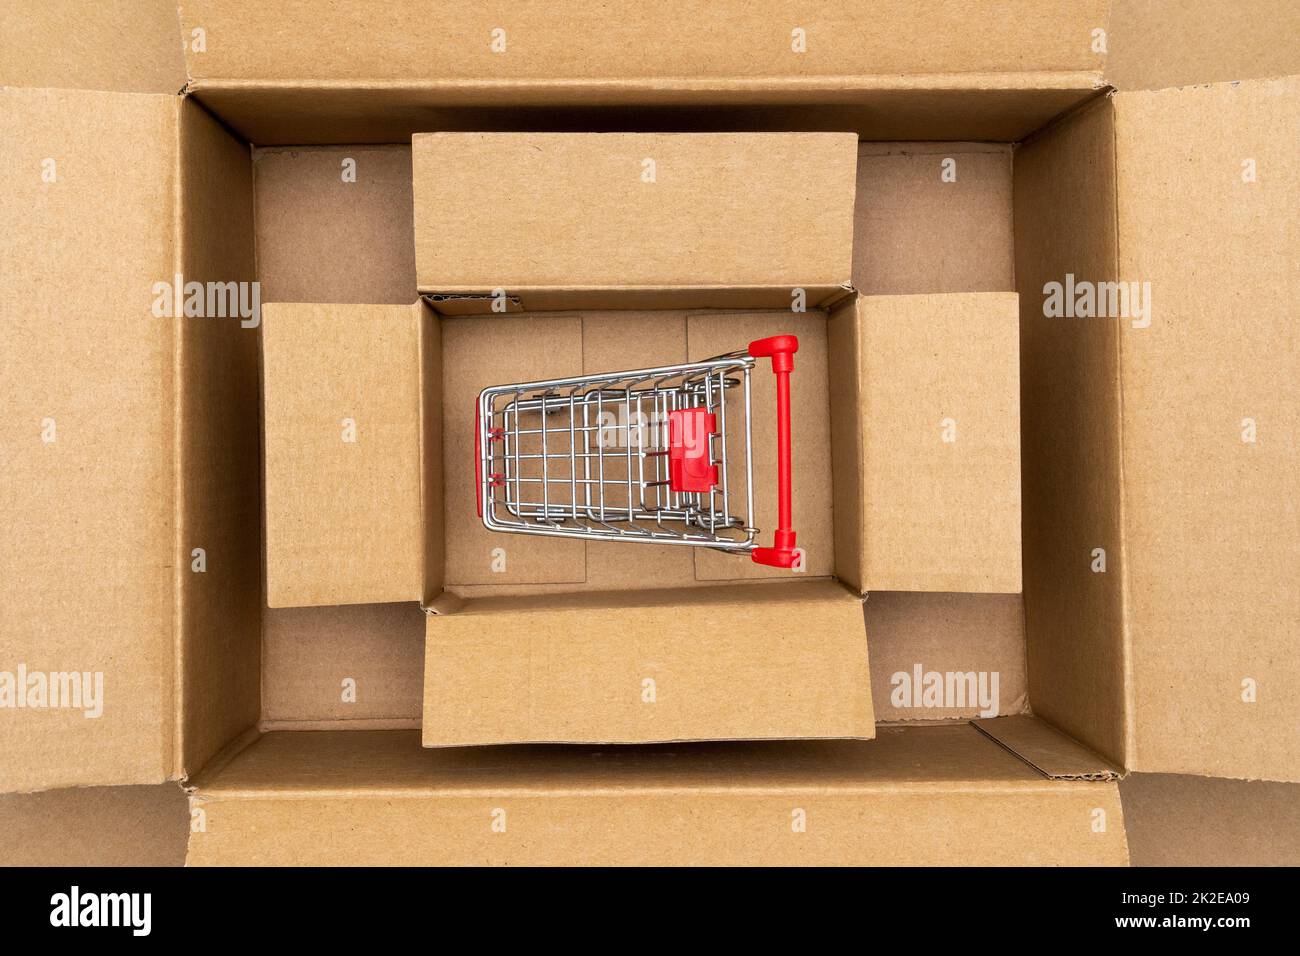 Shopping cart inside open rectangular cardboard box Stock Photo